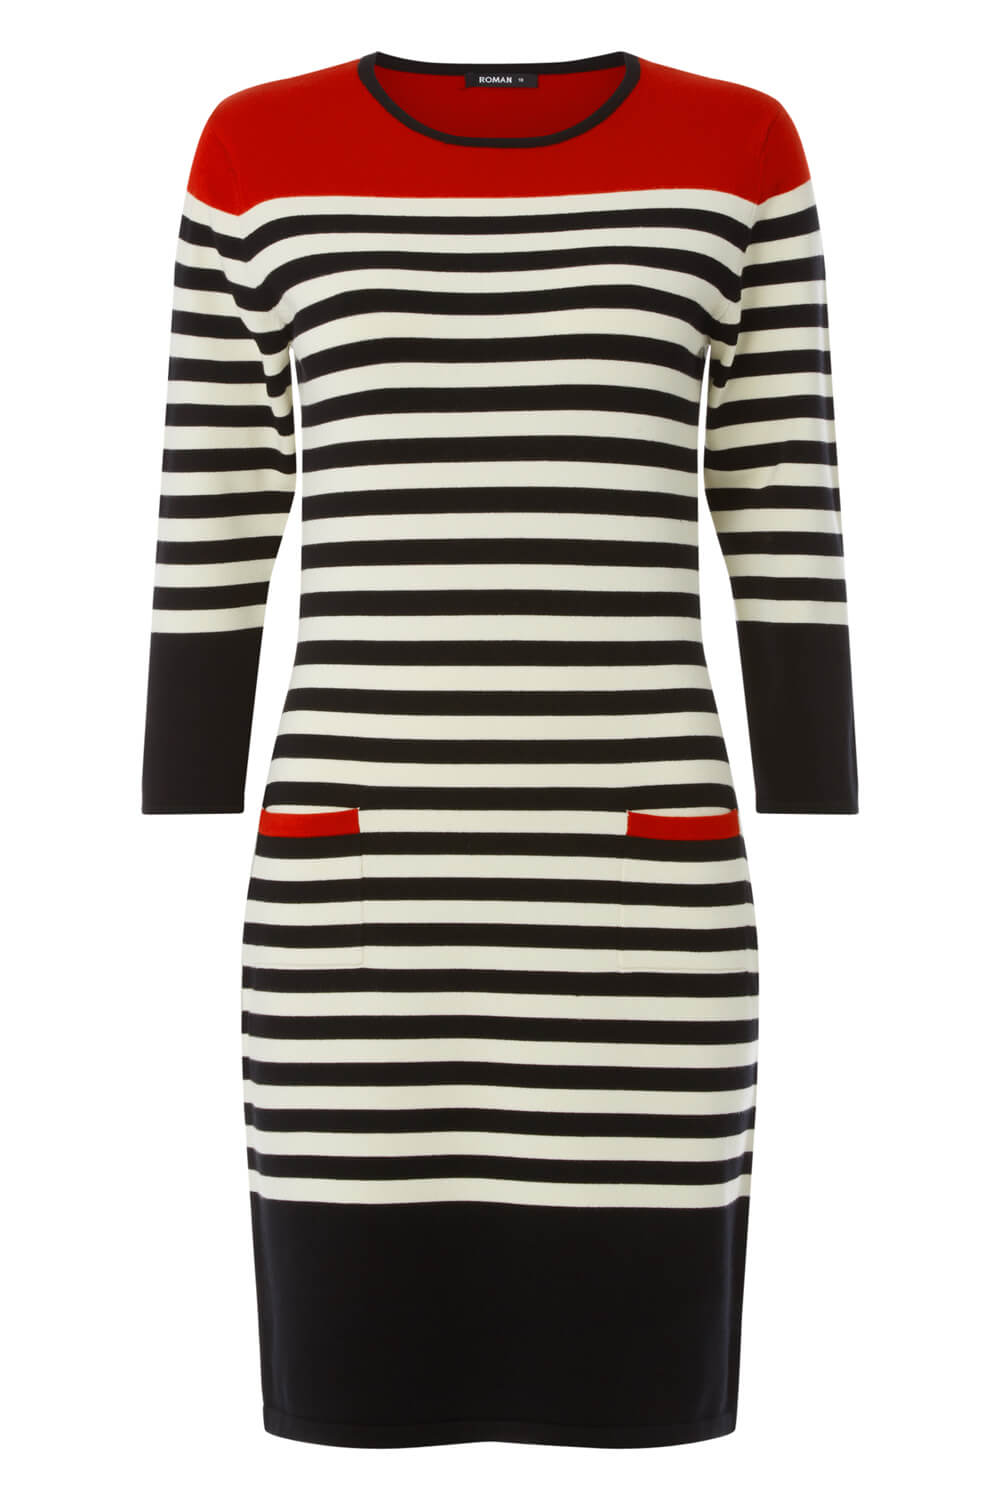 Stripe Pocket Knitted Shift Dress in Red - Roman Originals UK